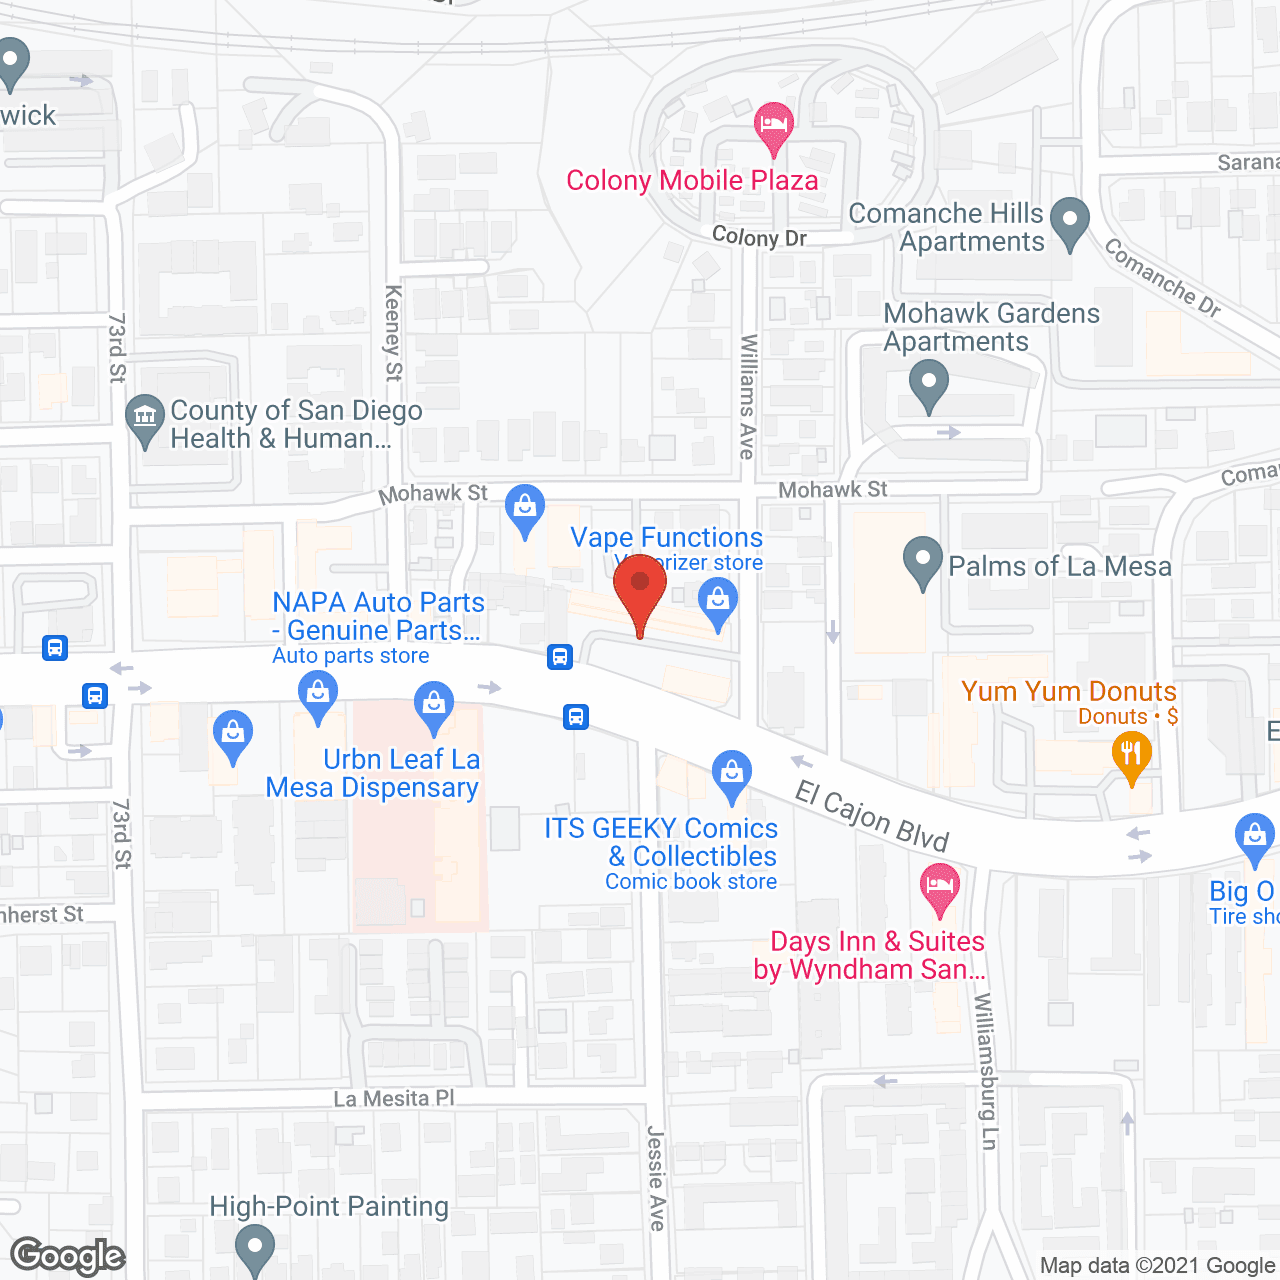 Home Instead - La Mesa, CA in google map